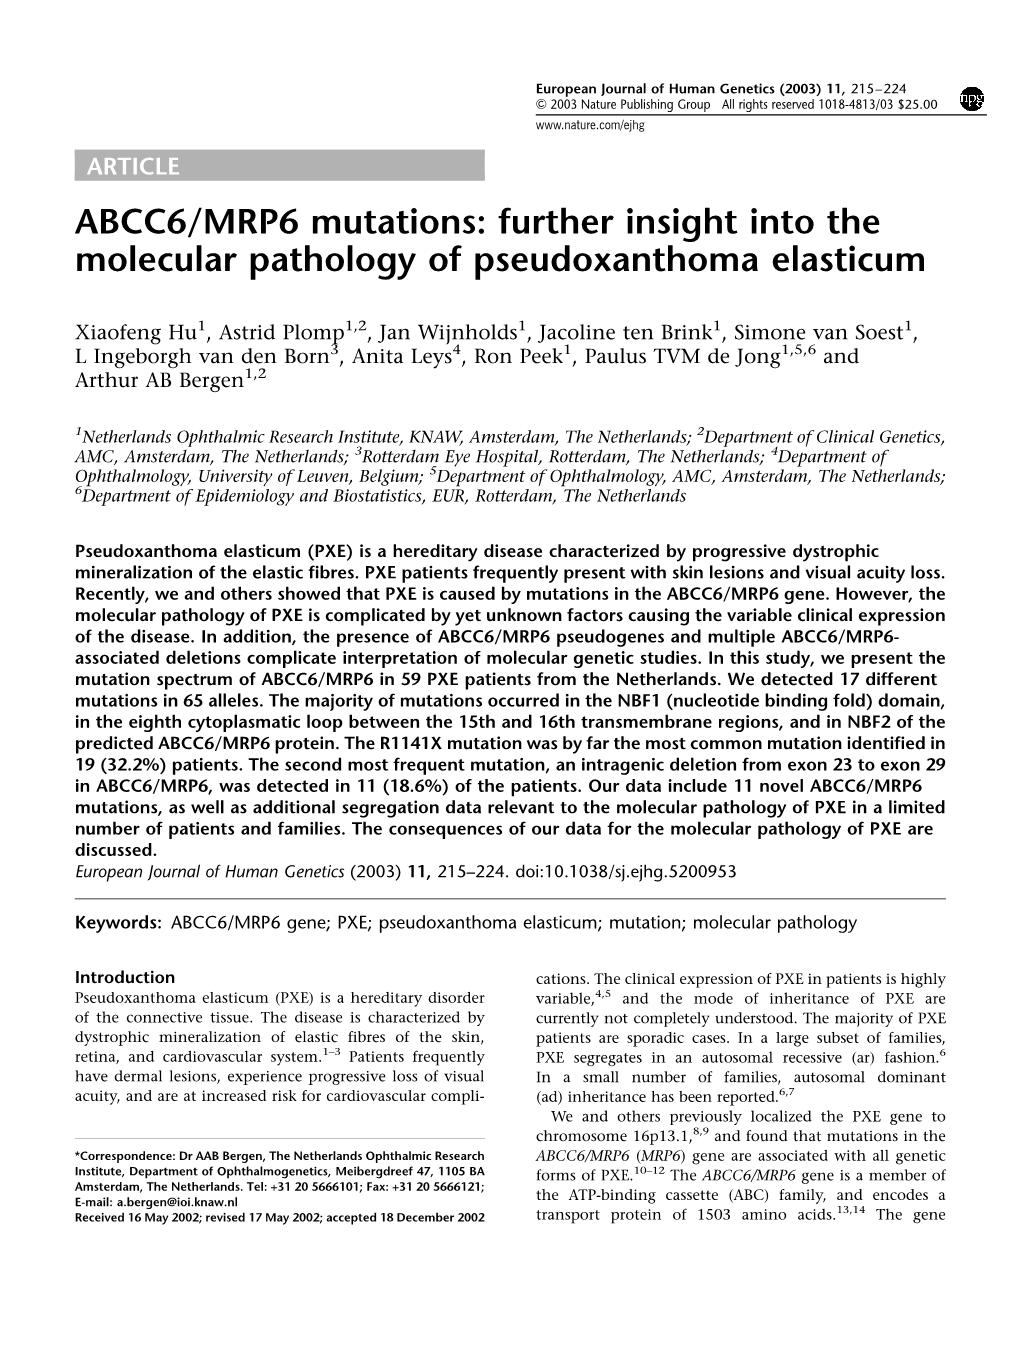 ABCC6/MRP6 Mutations: Further Insight Into the Molecular Pathology of Pseudoxanthoma Elasticum